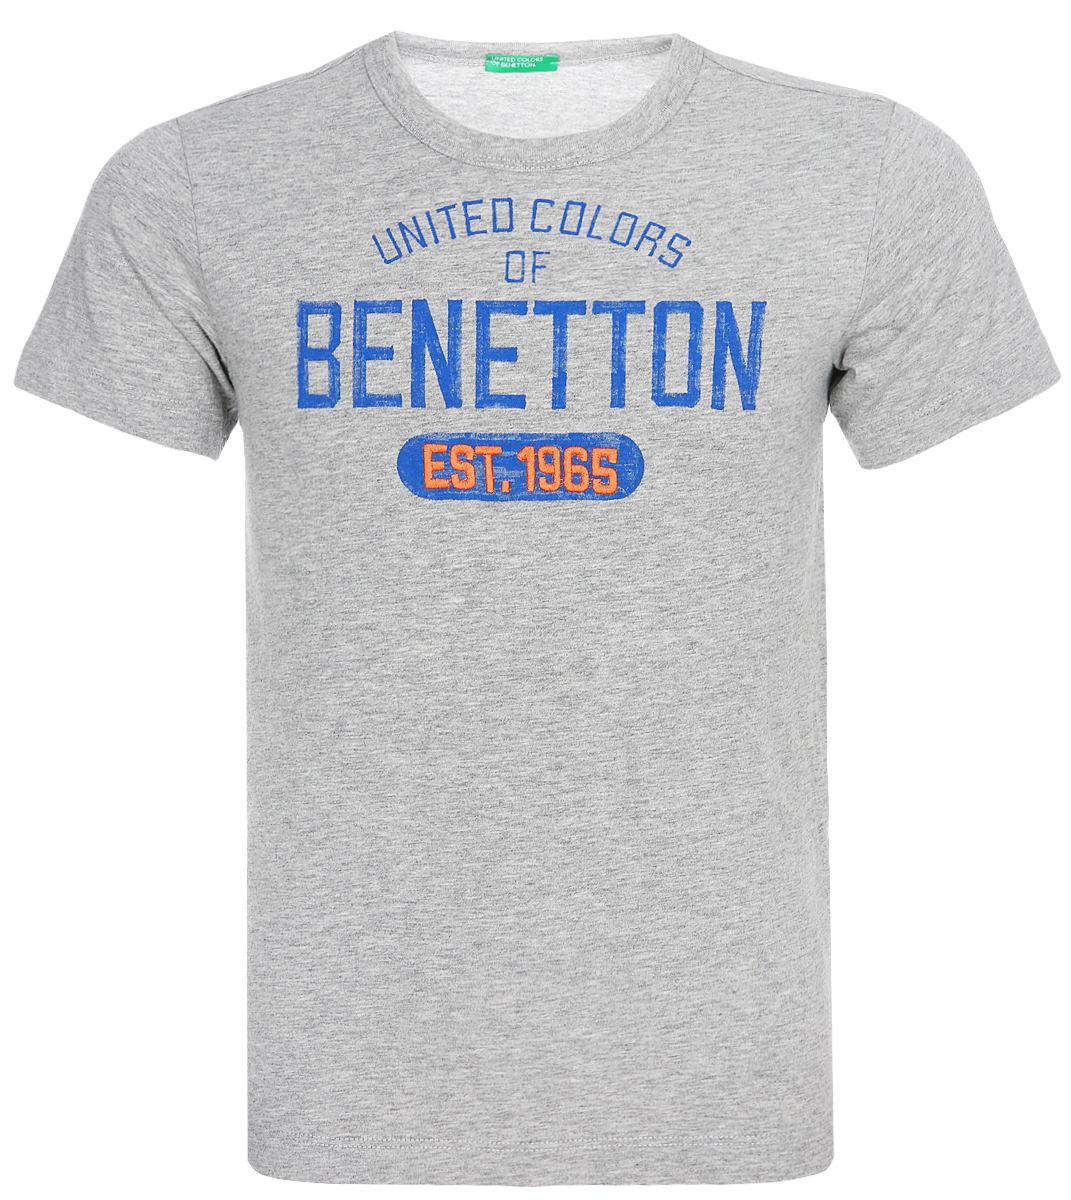 Футболка для мальчика United Colors of Benetton, цвет: серый. 3I1XC13NW_501. Размер 160